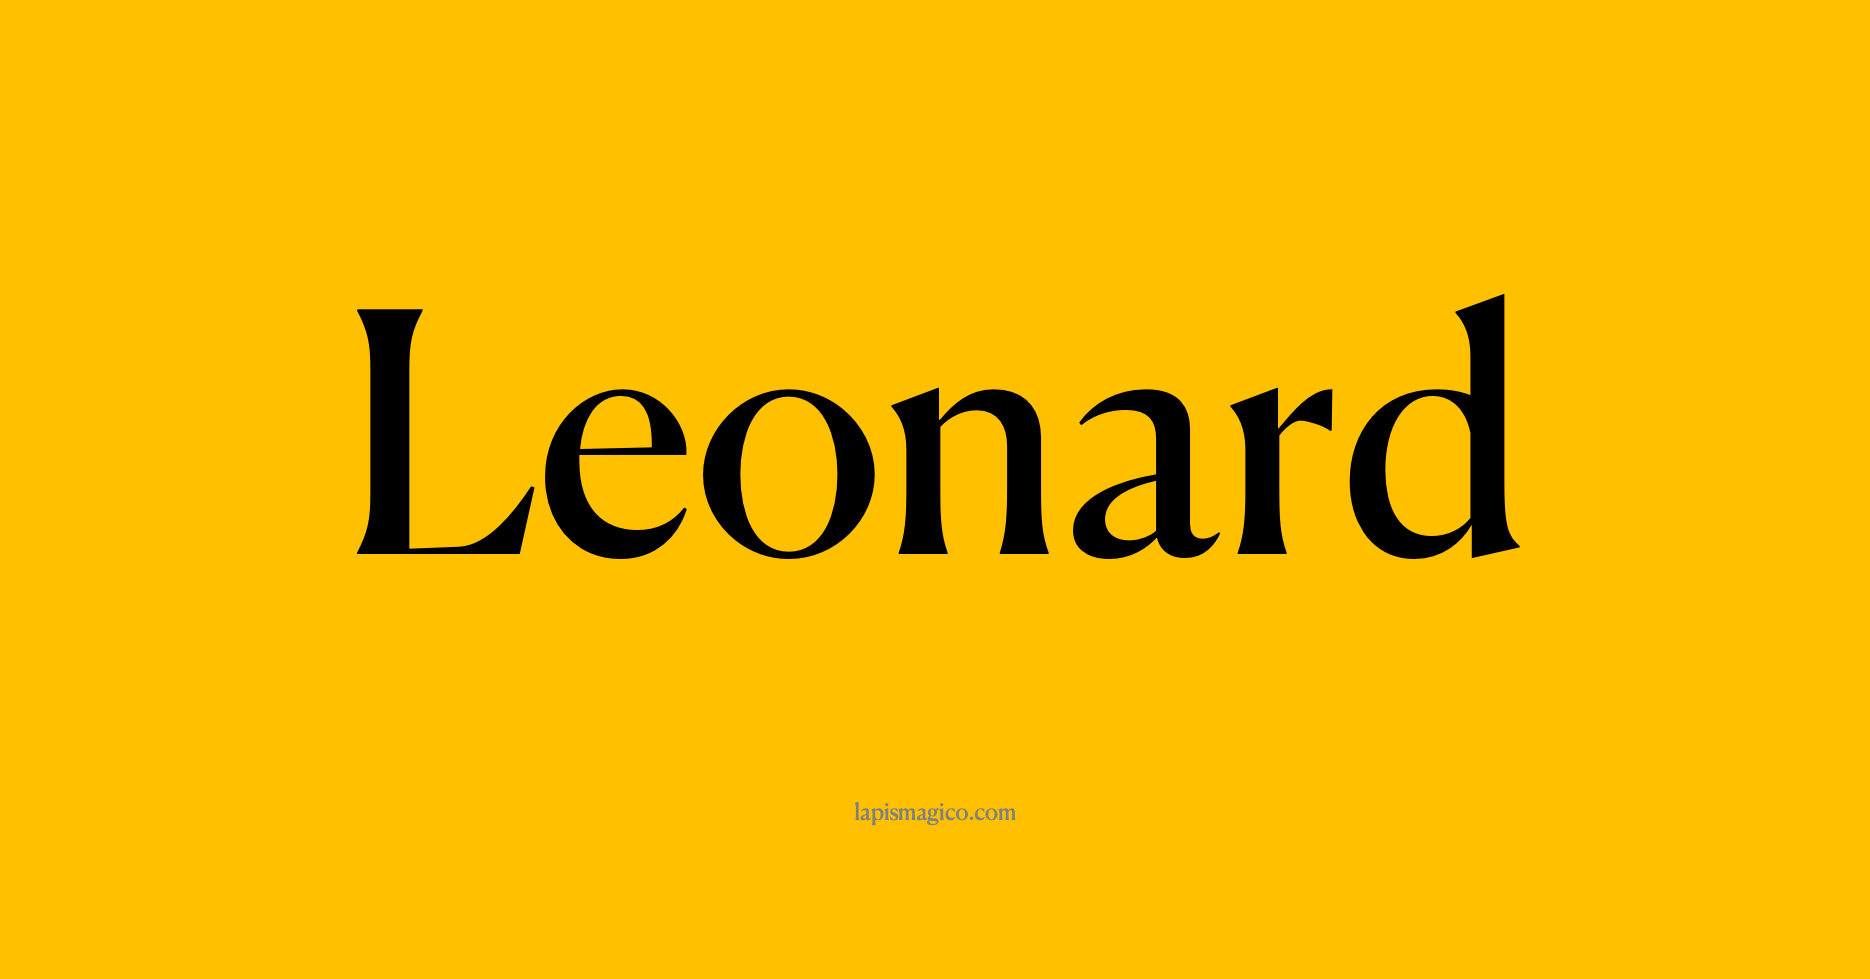 Nome Leonard